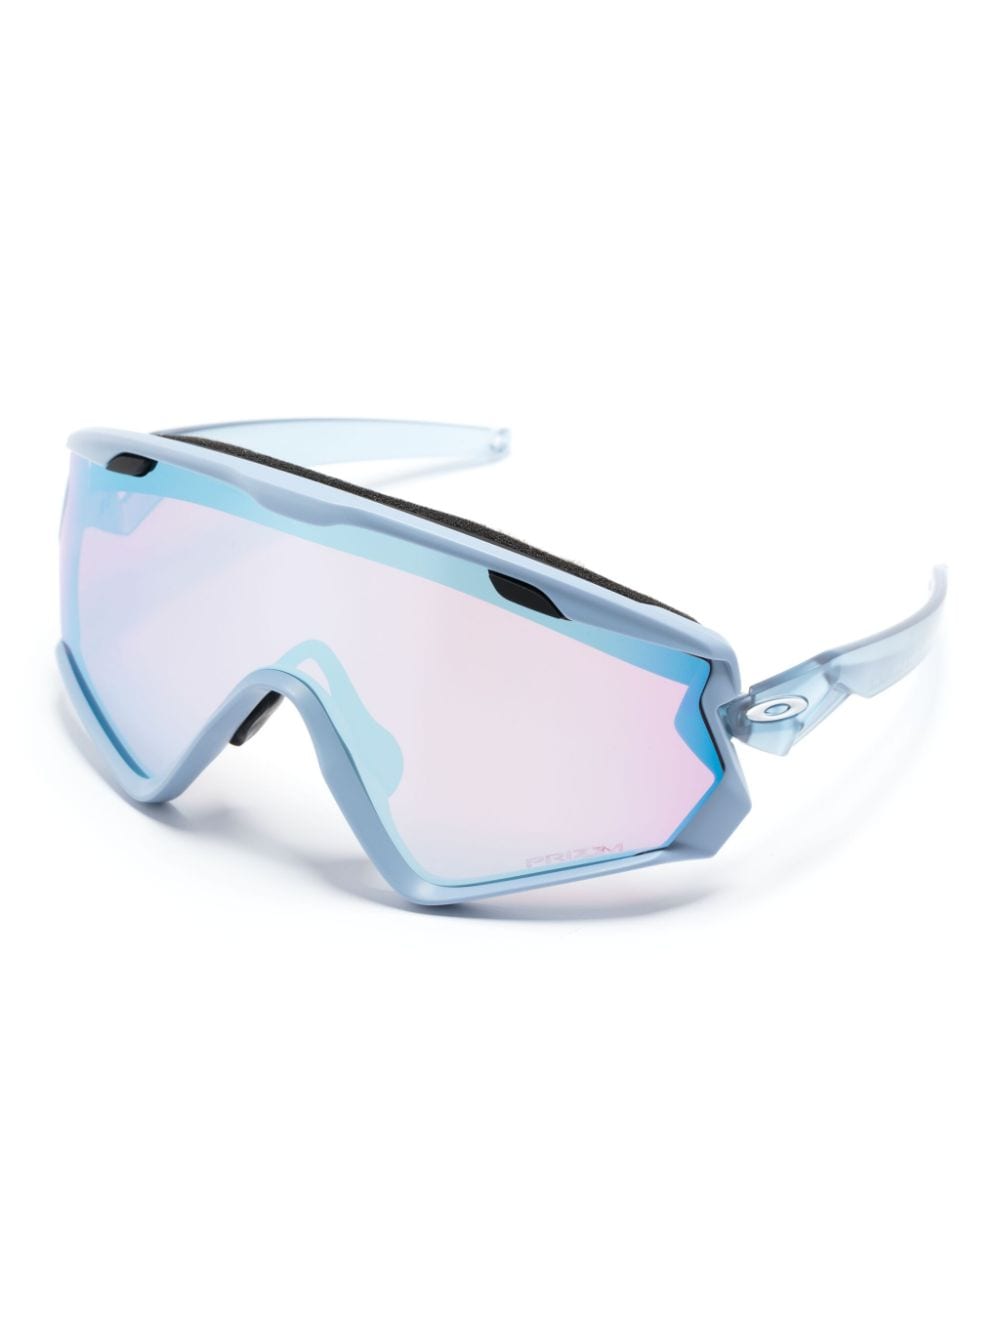 Image 2 of Oakley Wind Jacket 2.0 shield-frame sunglasses